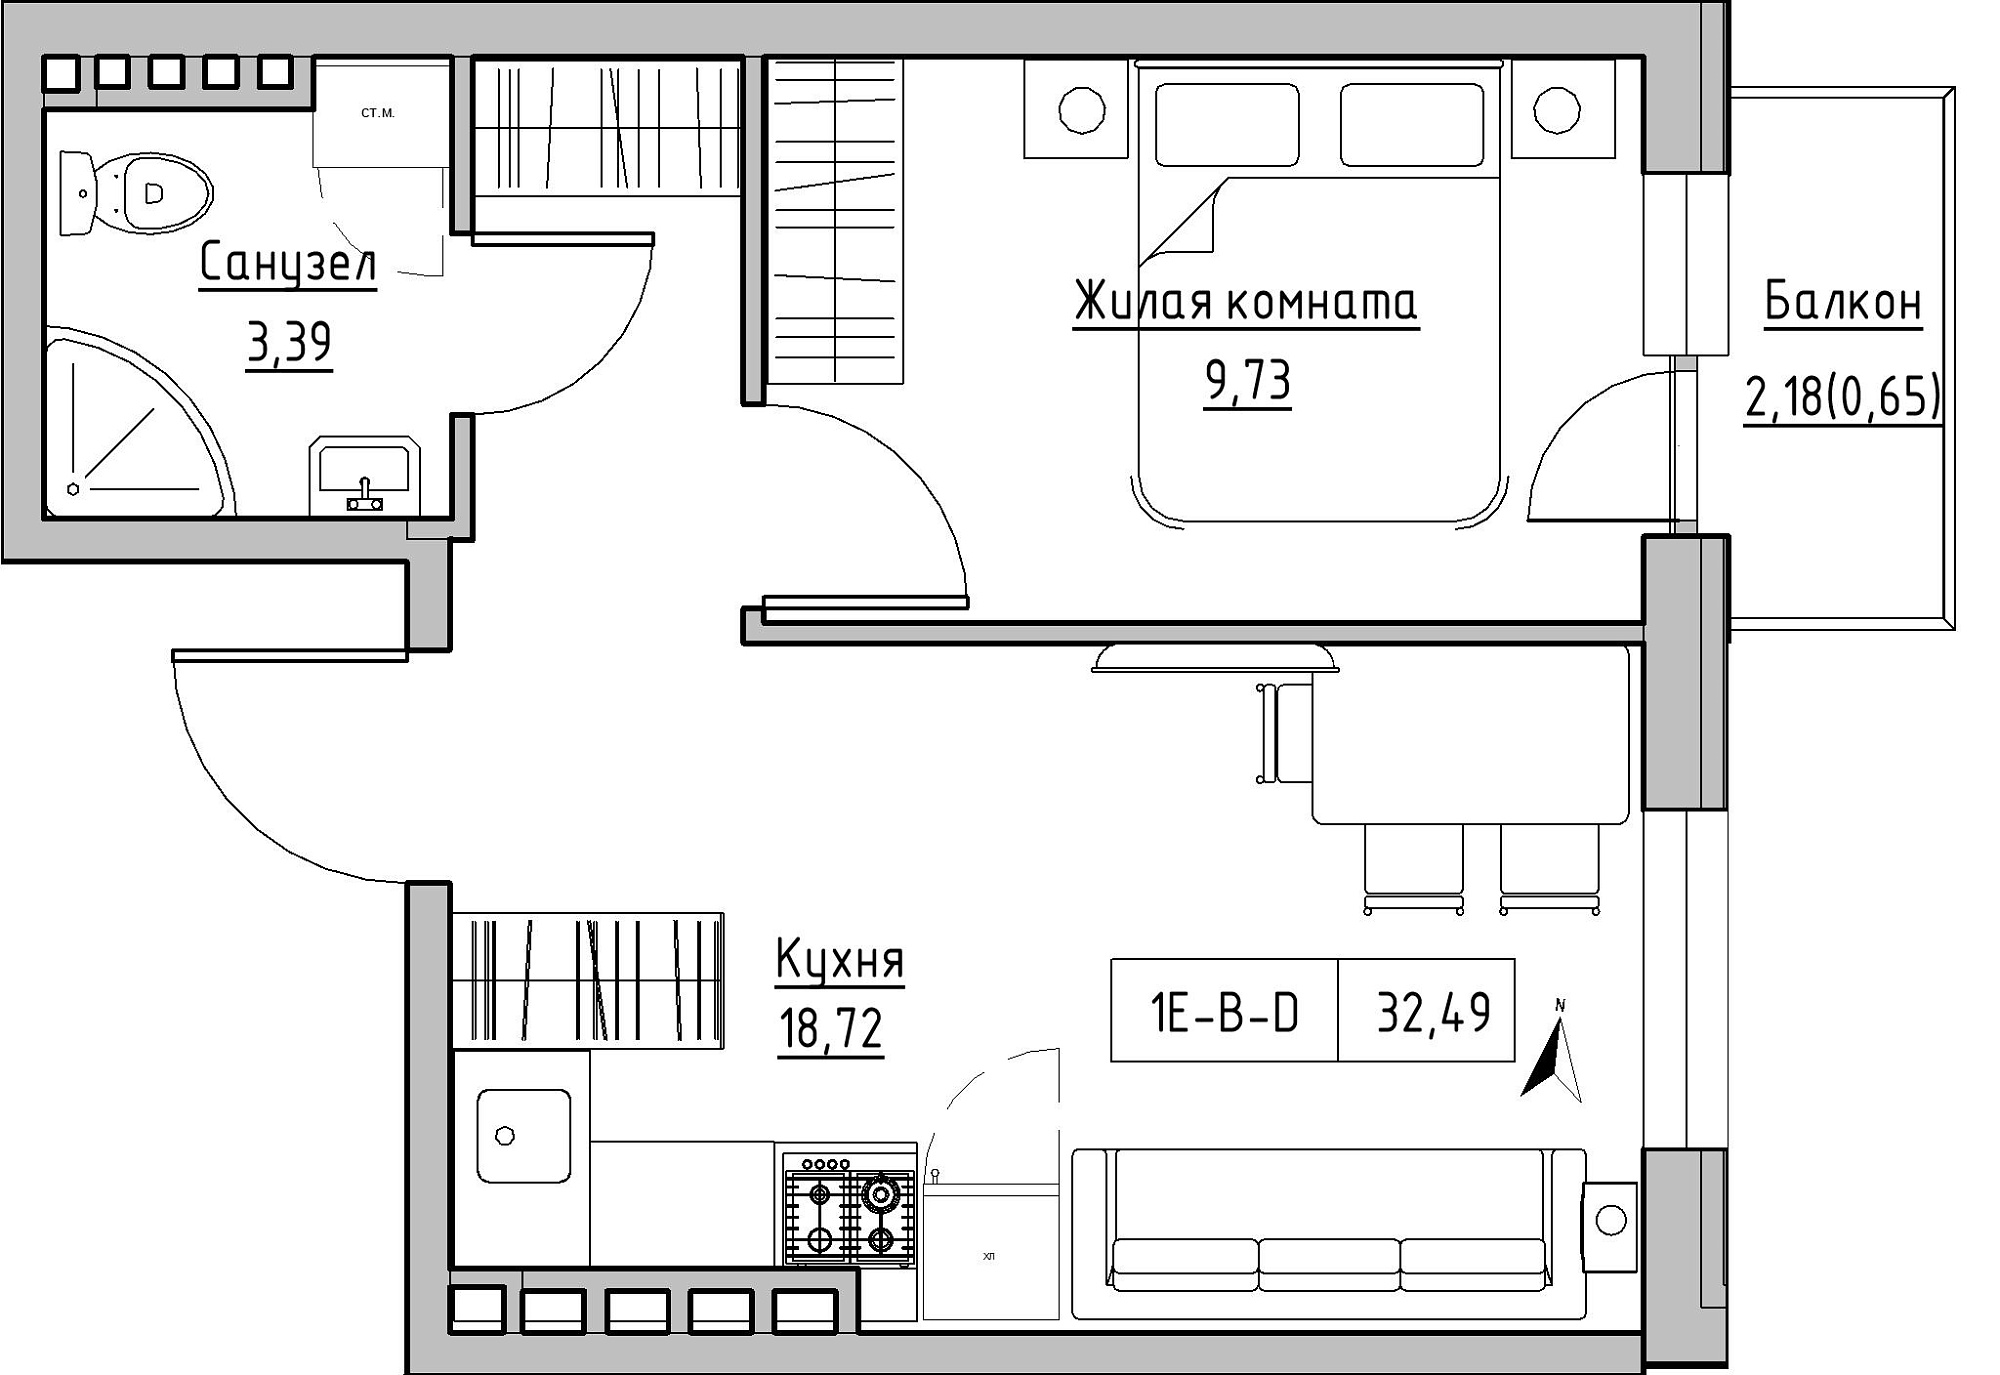 Planning 1-rm flats area 32.49m2, KS-024-05/0016.